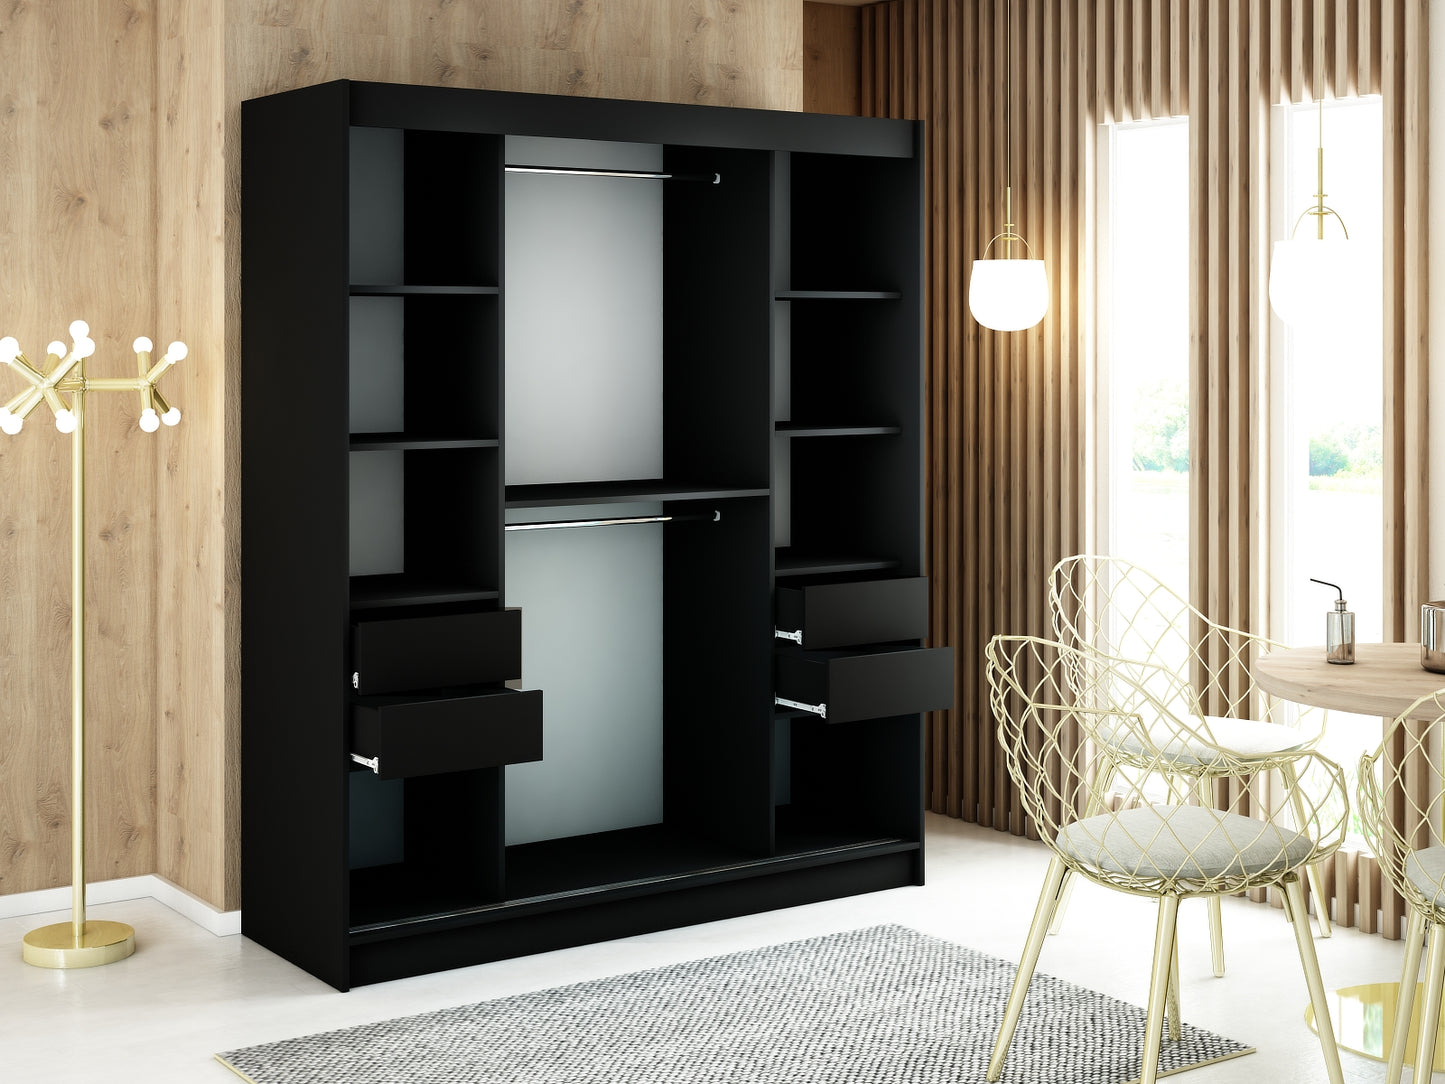 MALI V2 - Sliding Wardrobe Black with Mirror Gold Details Shelves Rails Drawers Optional >180cm<